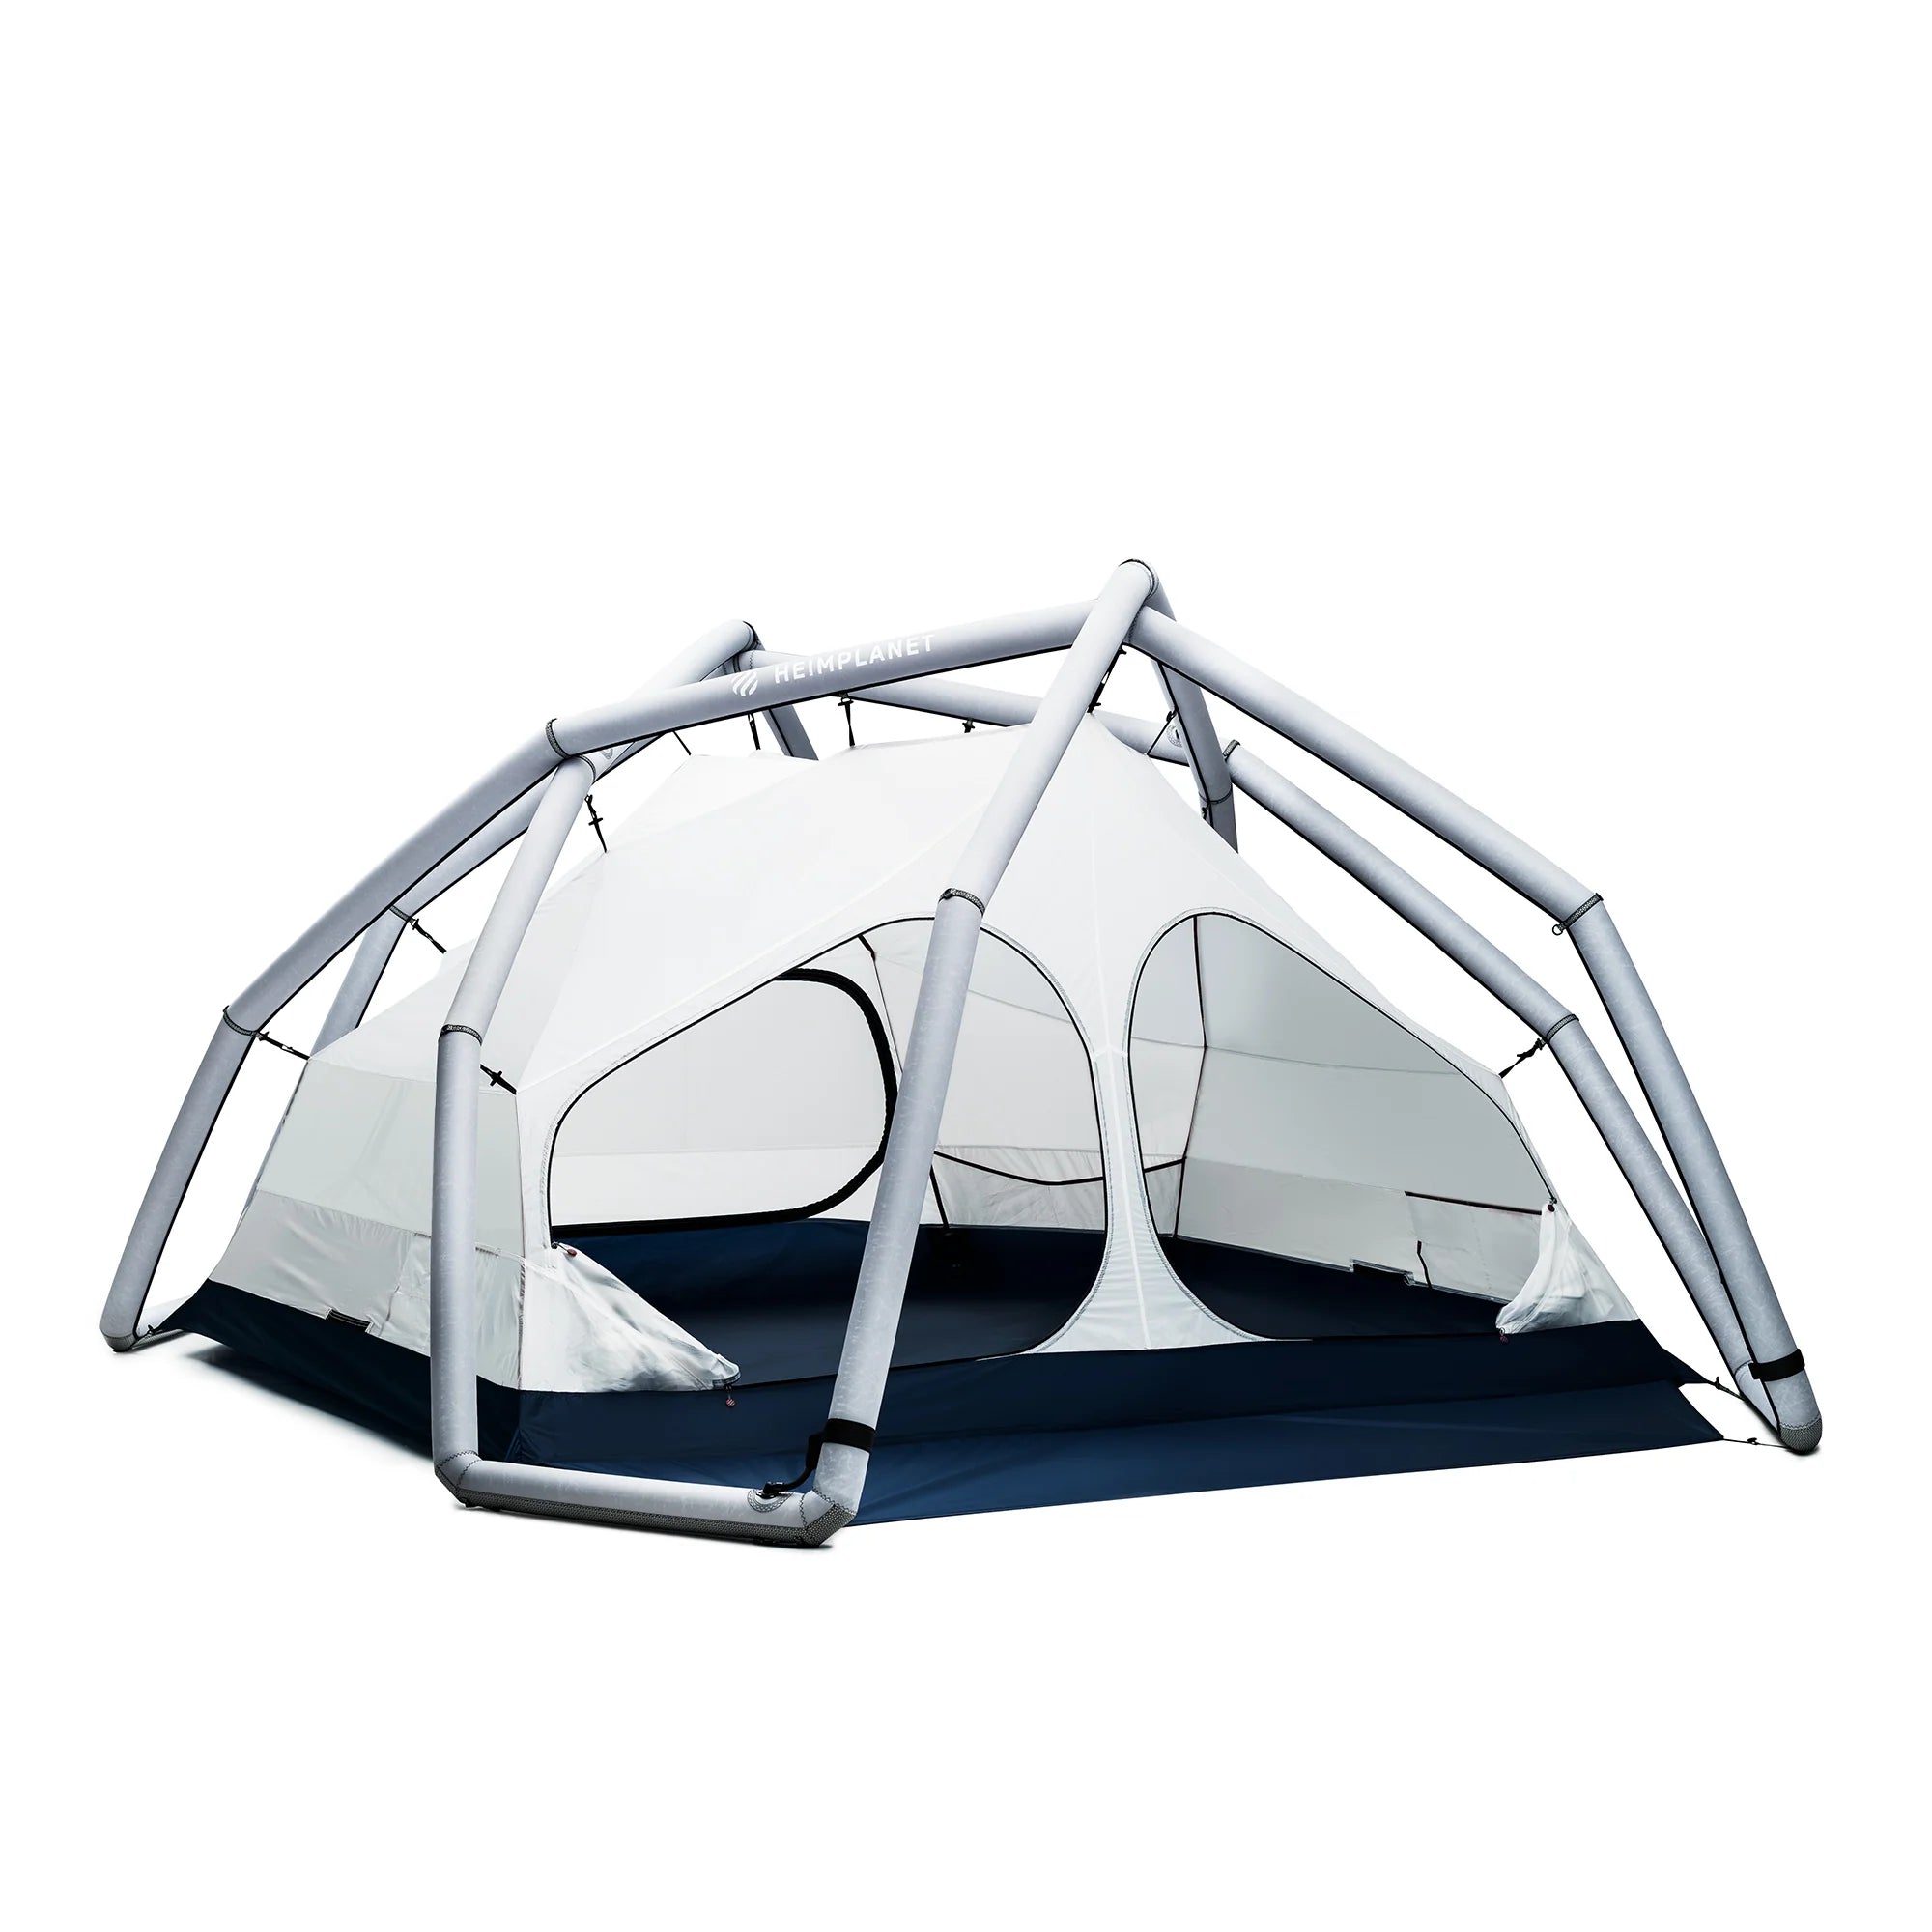 Backdoor inner tent, 4-season